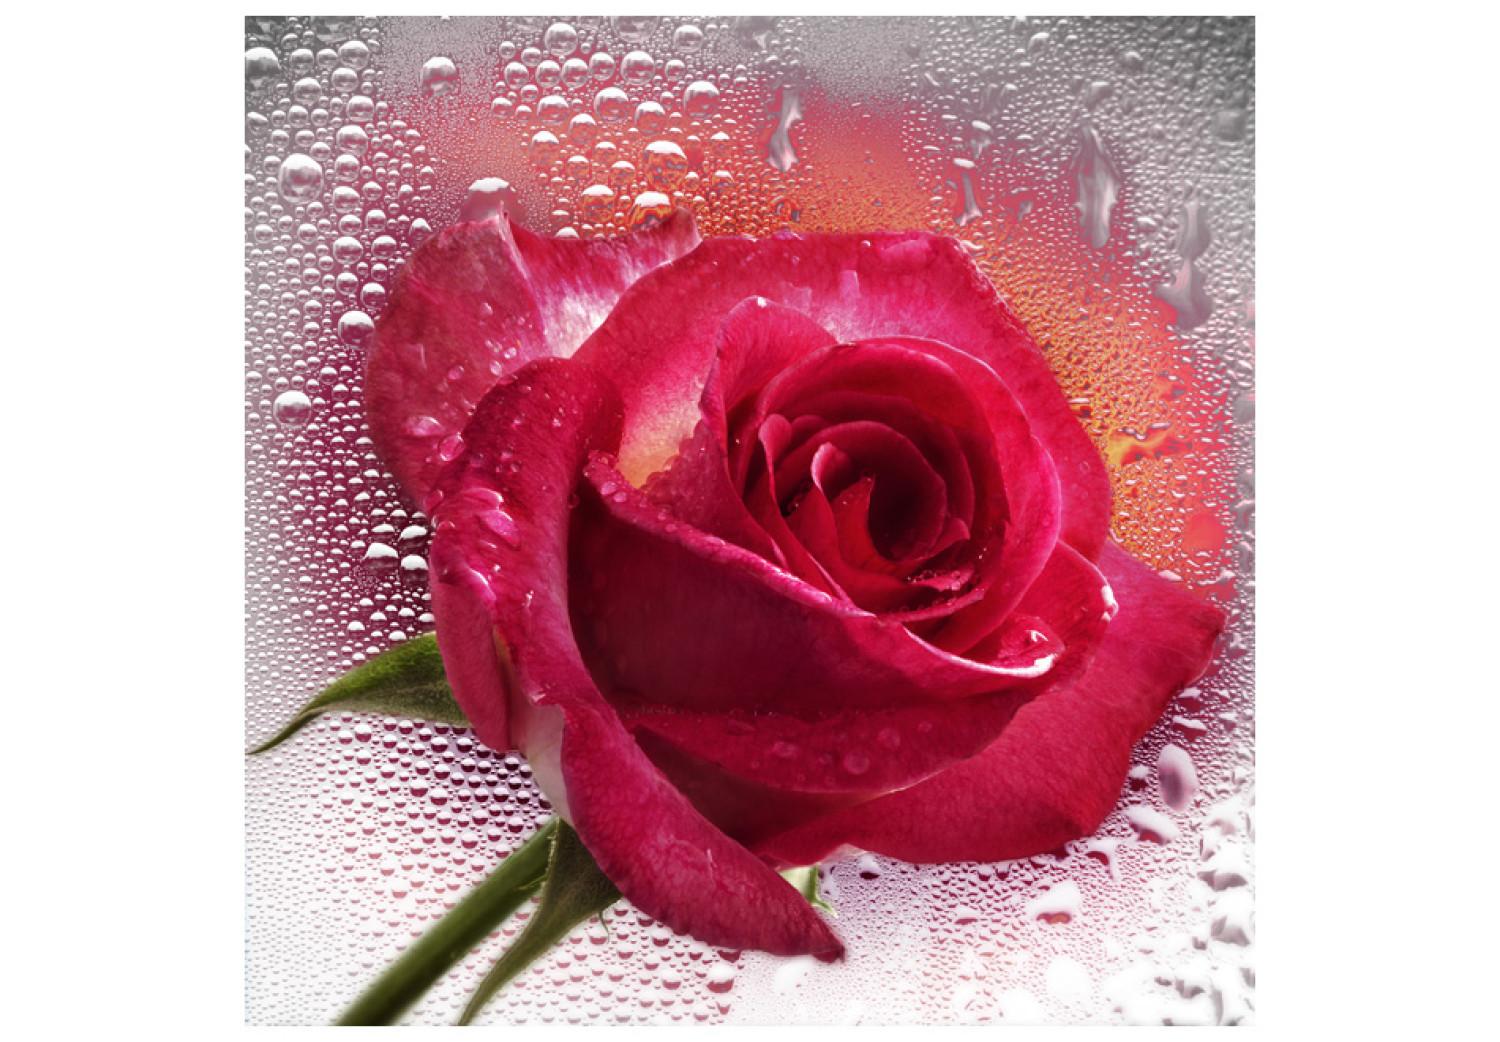 Fotomural a medida Rosa - retrato de flor rosa en cristal con gotas de agua